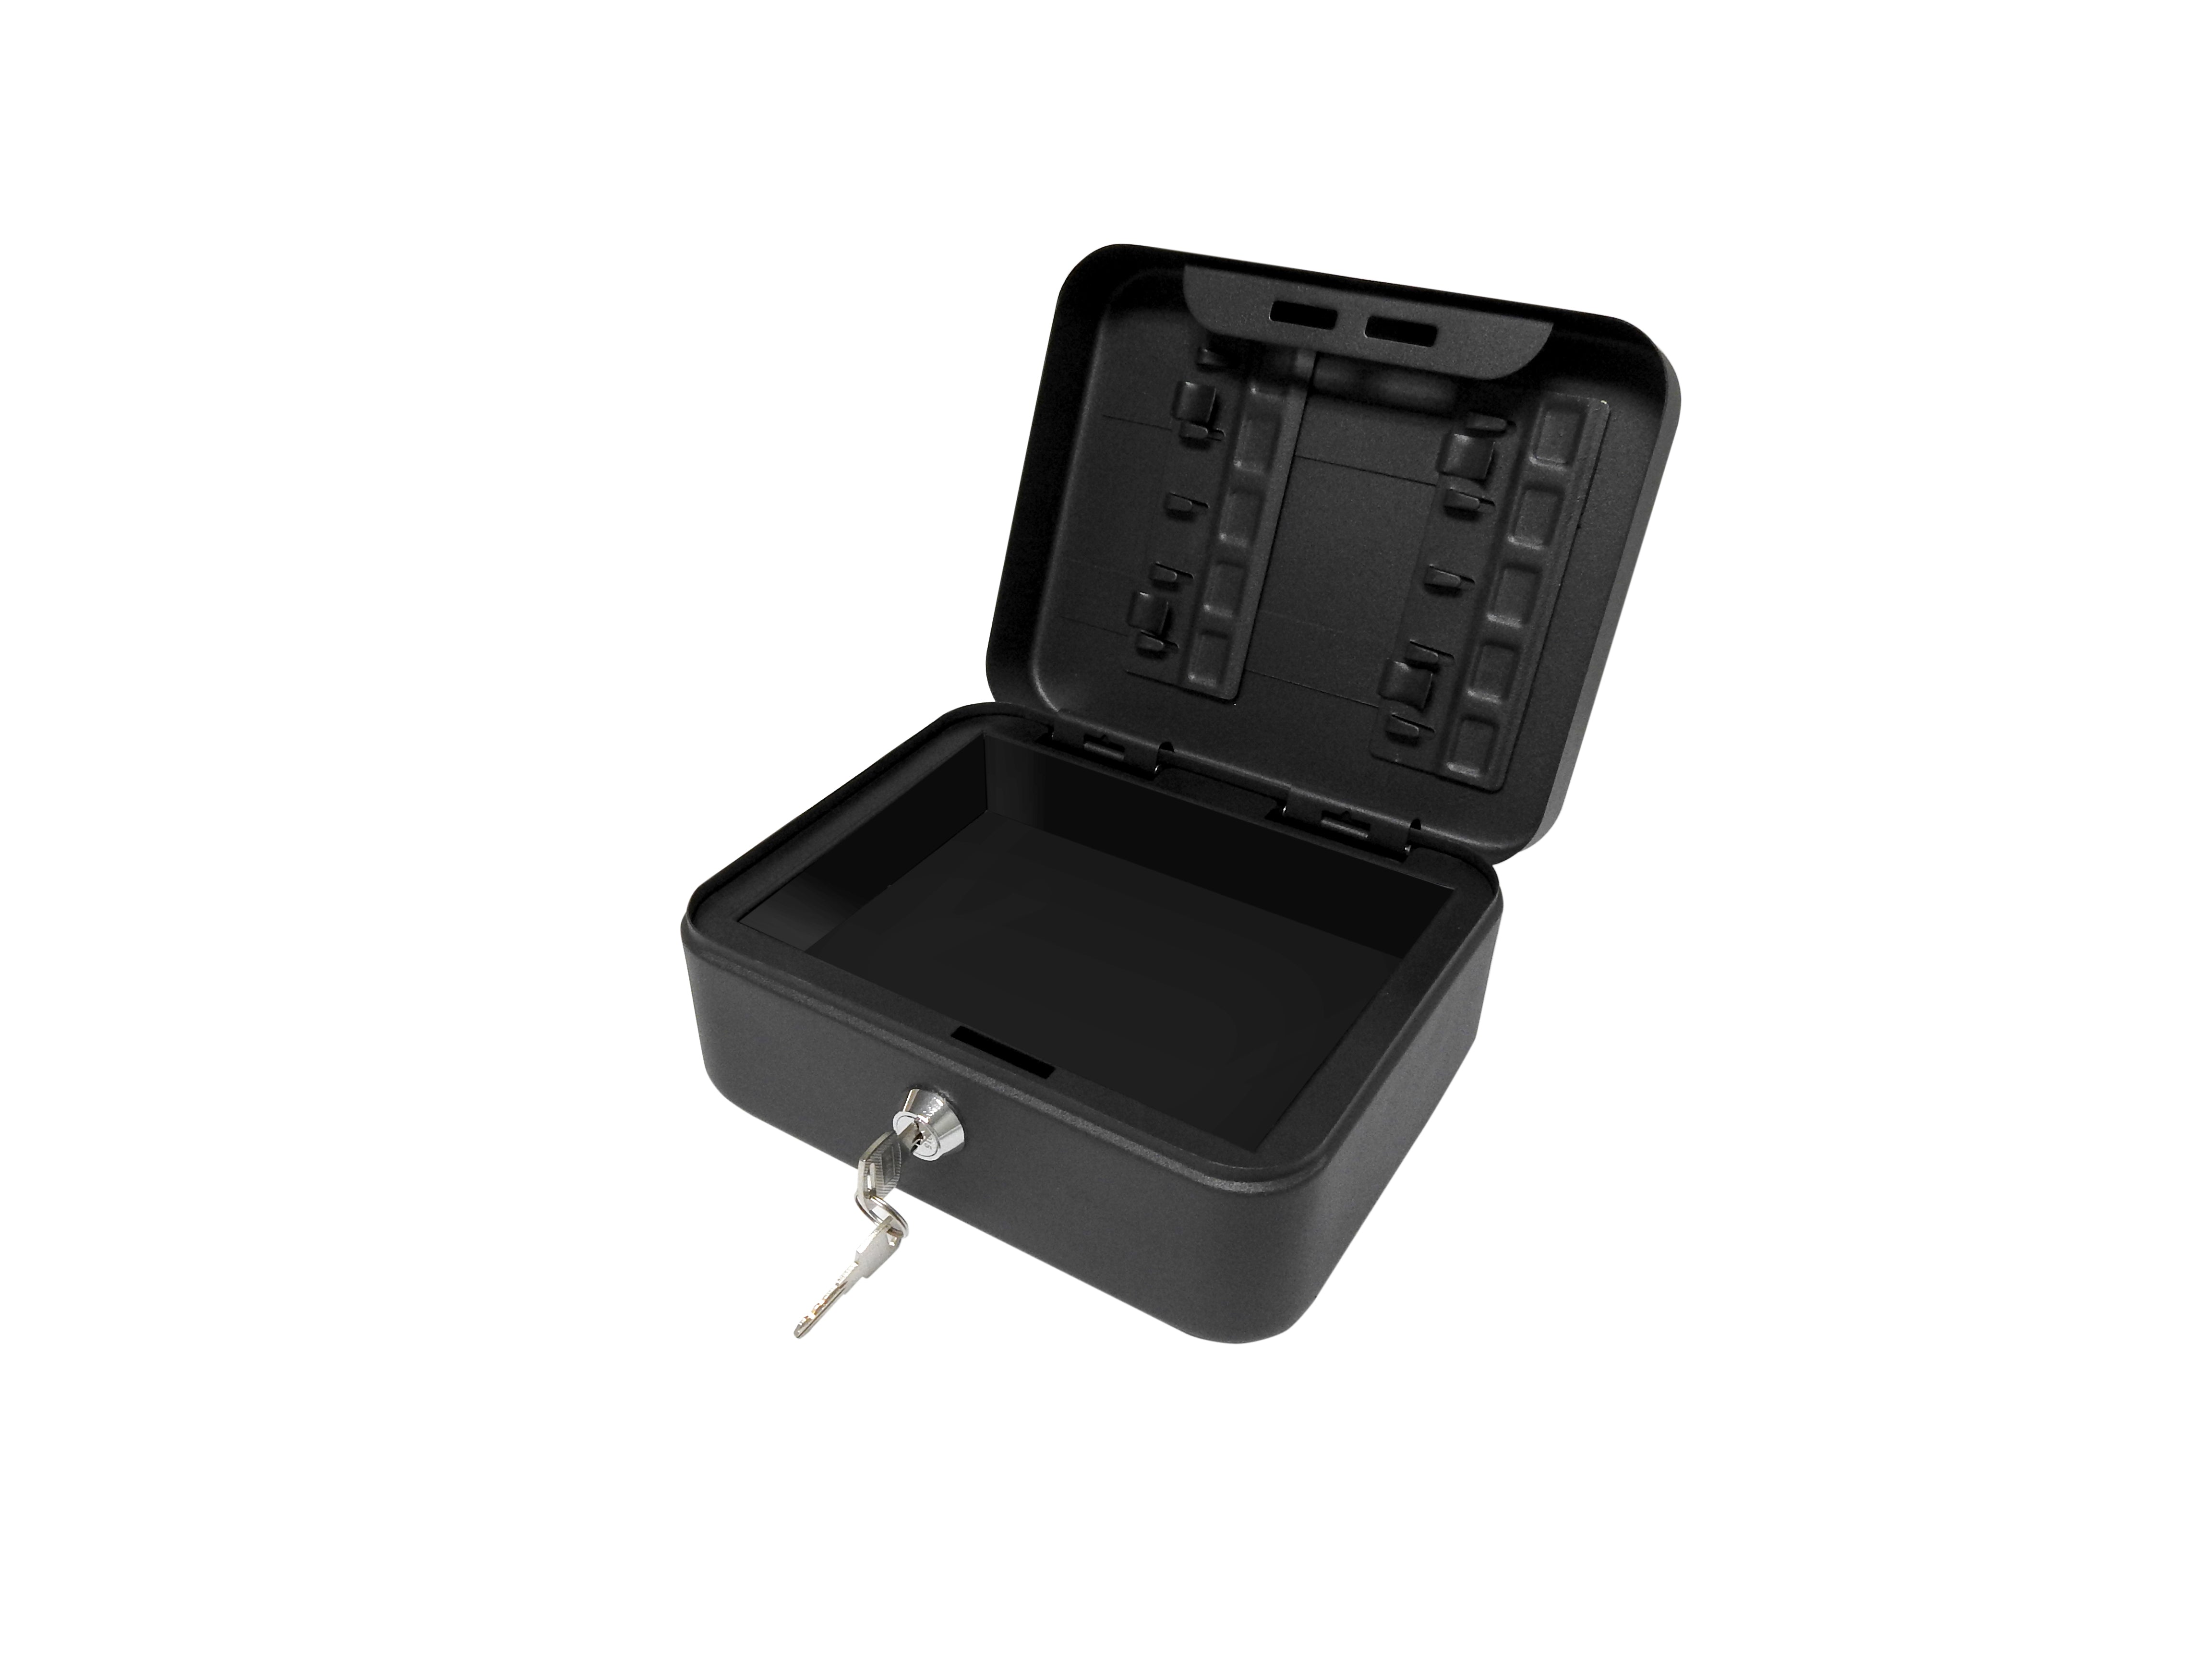 MCBK-1000/ DUAL FUNCTION CONVERTIBLE CASH BOX & KEY SECURITY BOX